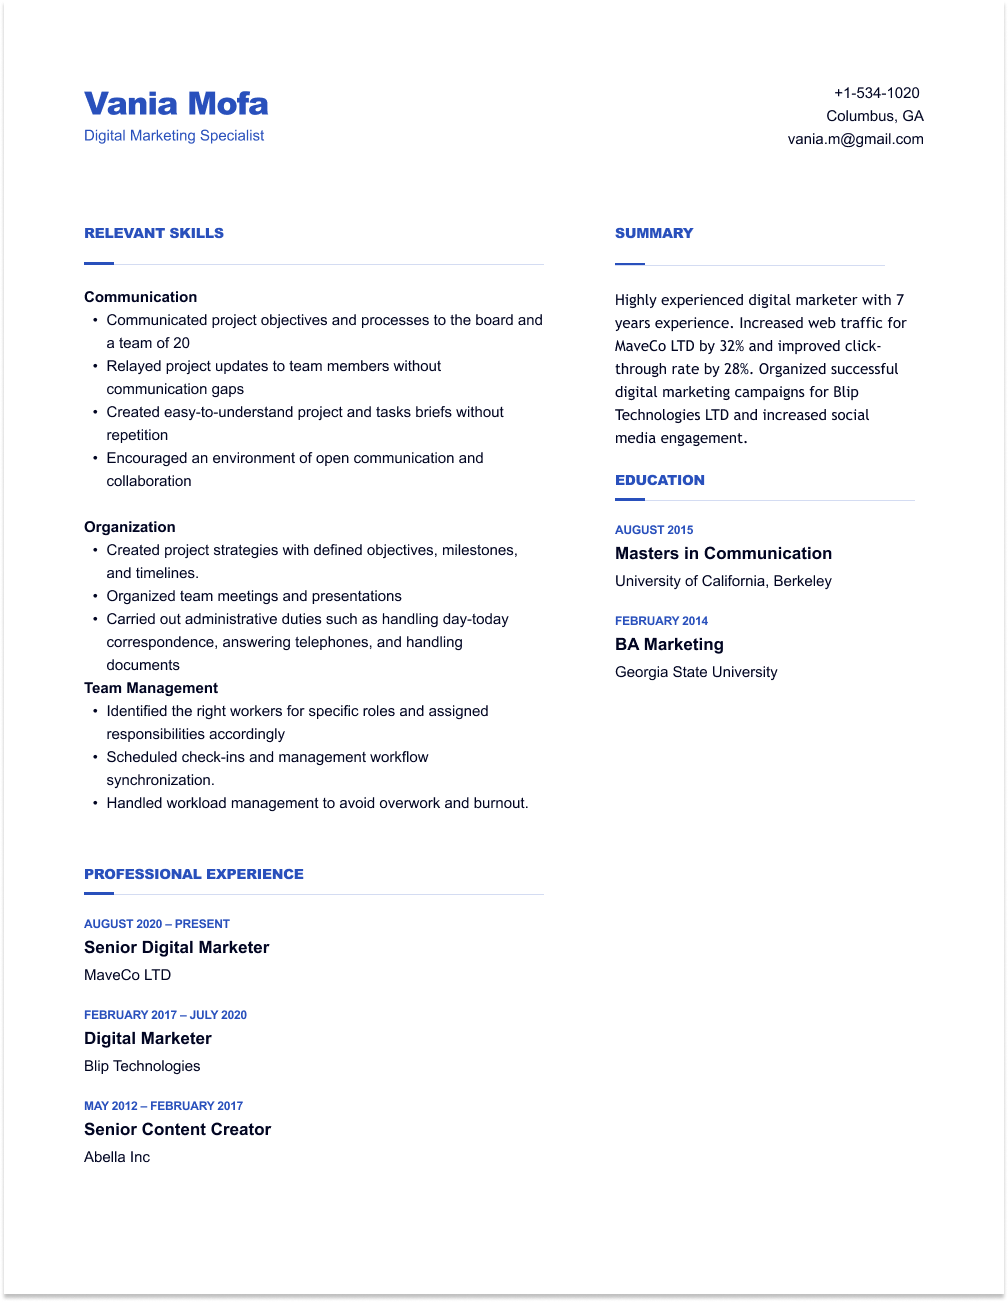 functional resume